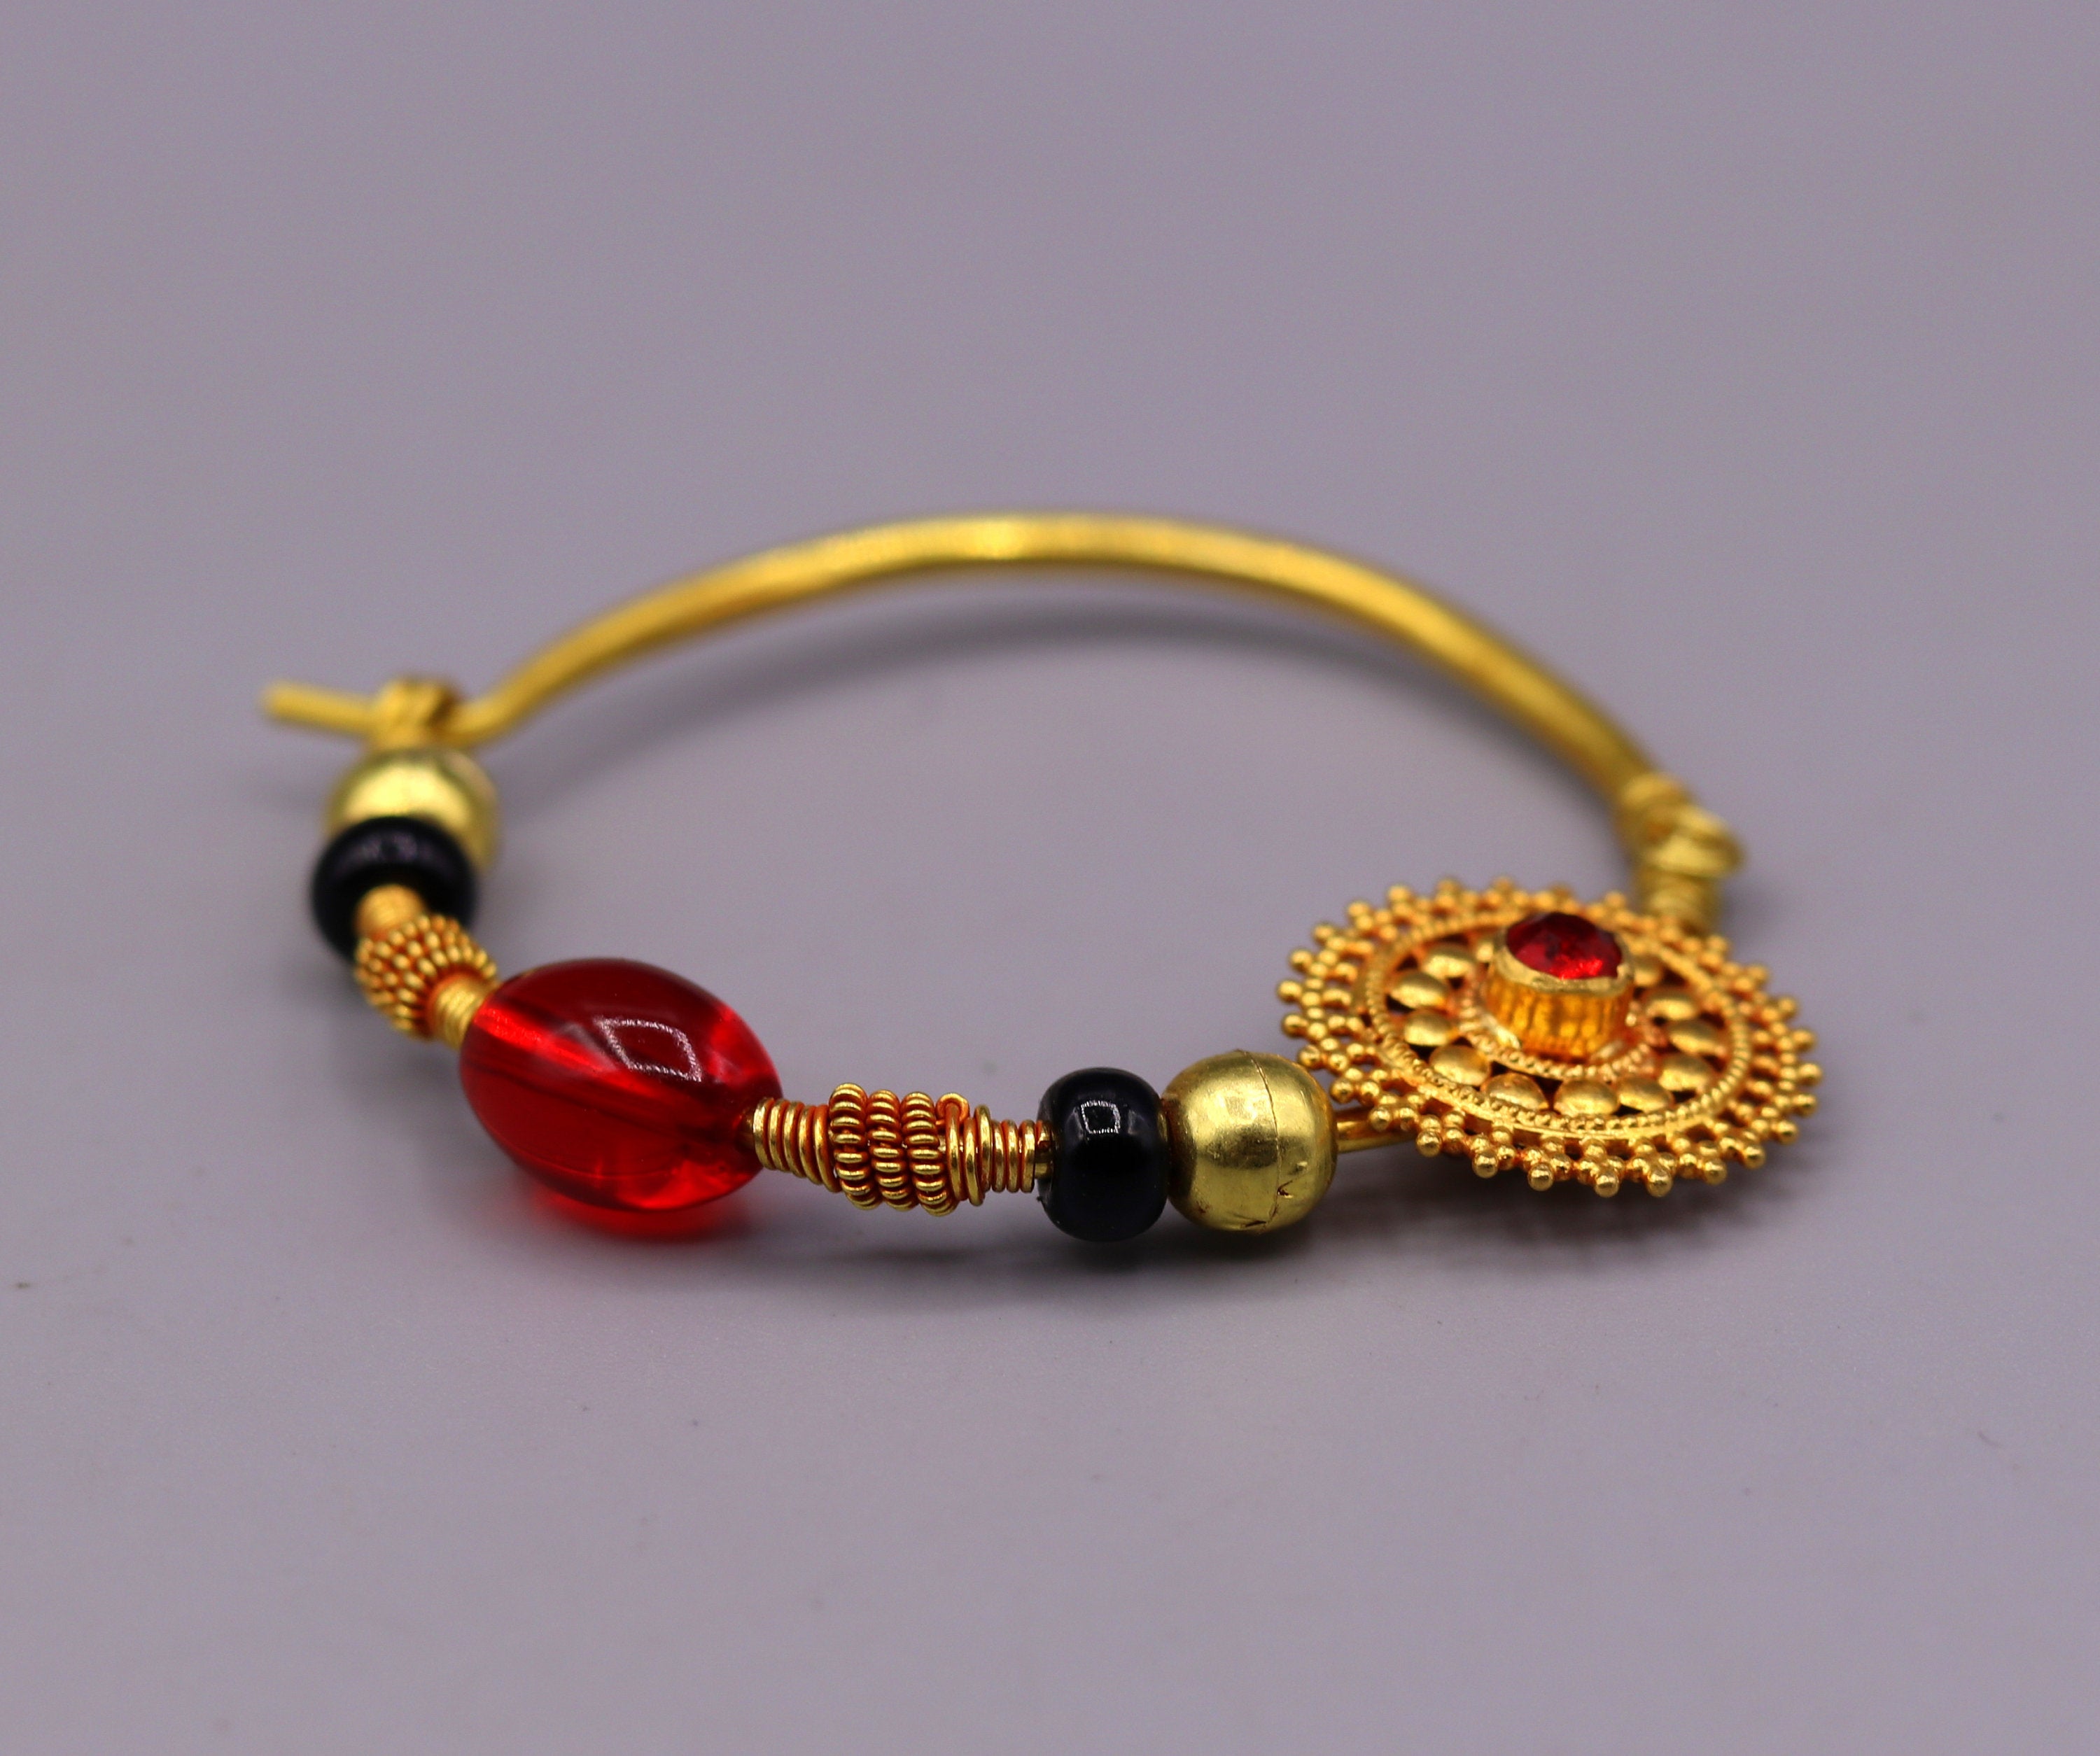 Pin by Ritu Sobti on jewellery | Latest gold ring designs, Gold rings  fashion, Gold ring designs